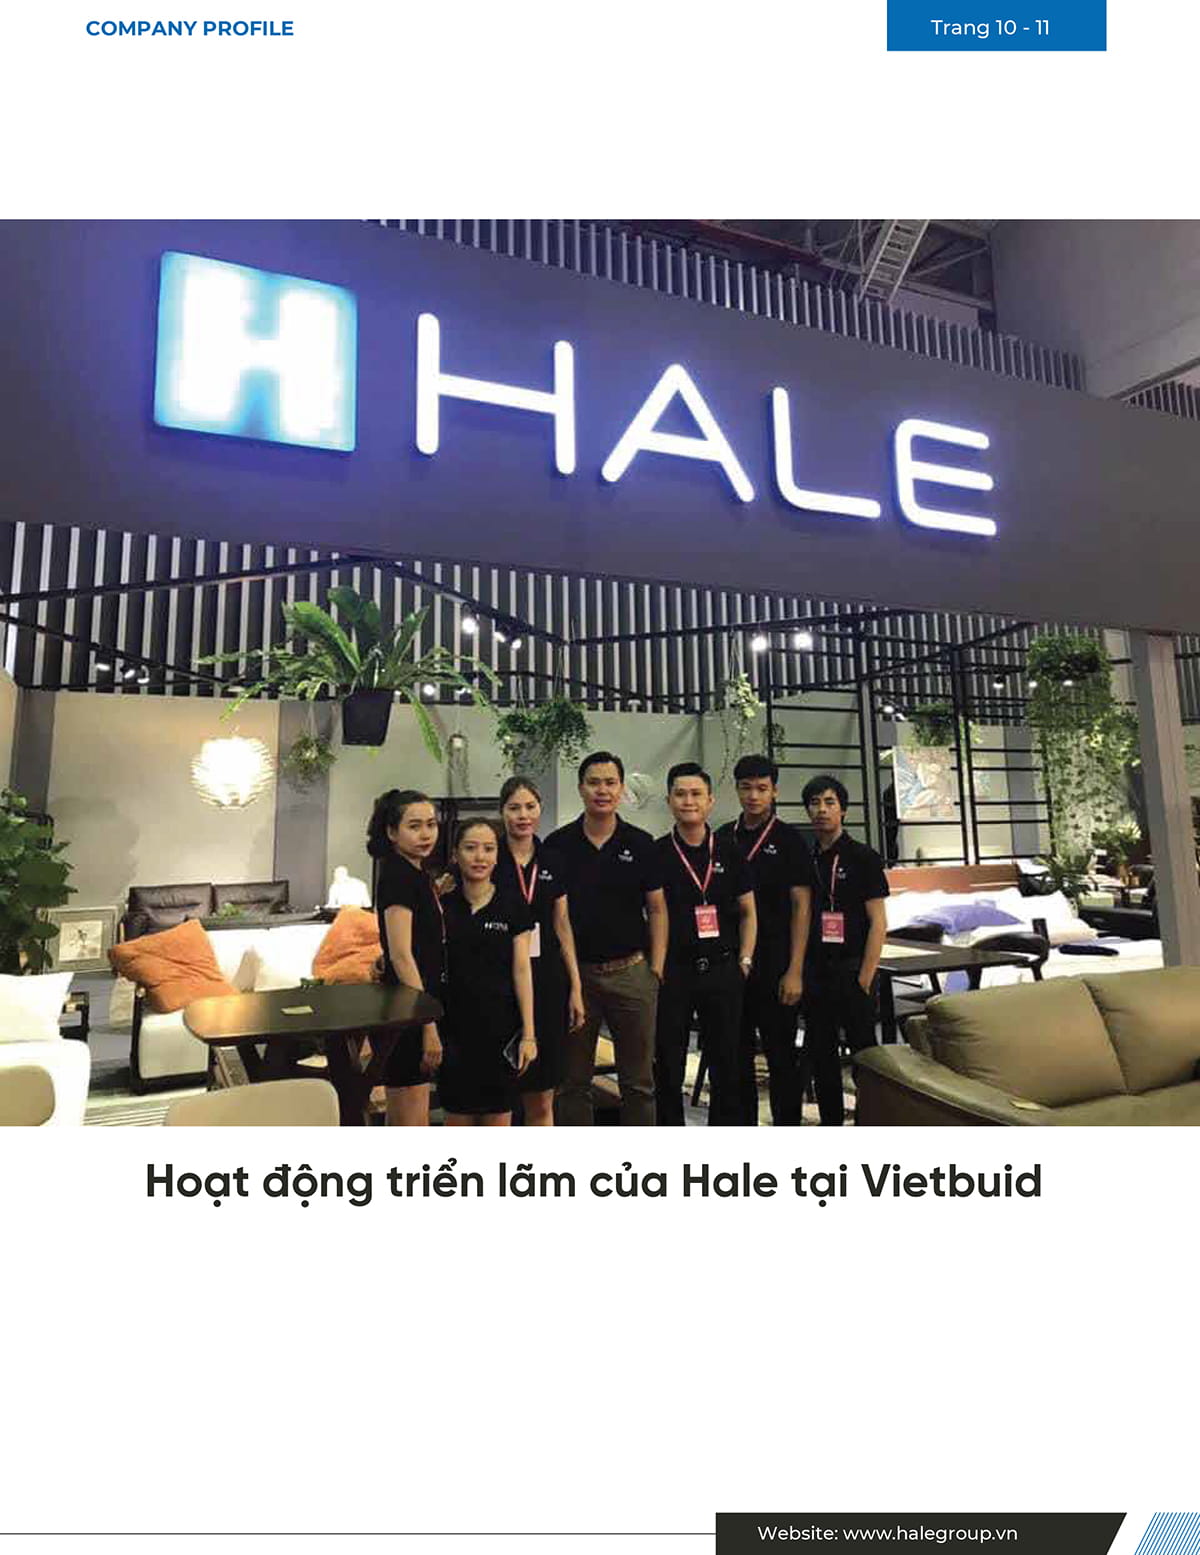 HSNL HALE VIETNAM VIEW 1